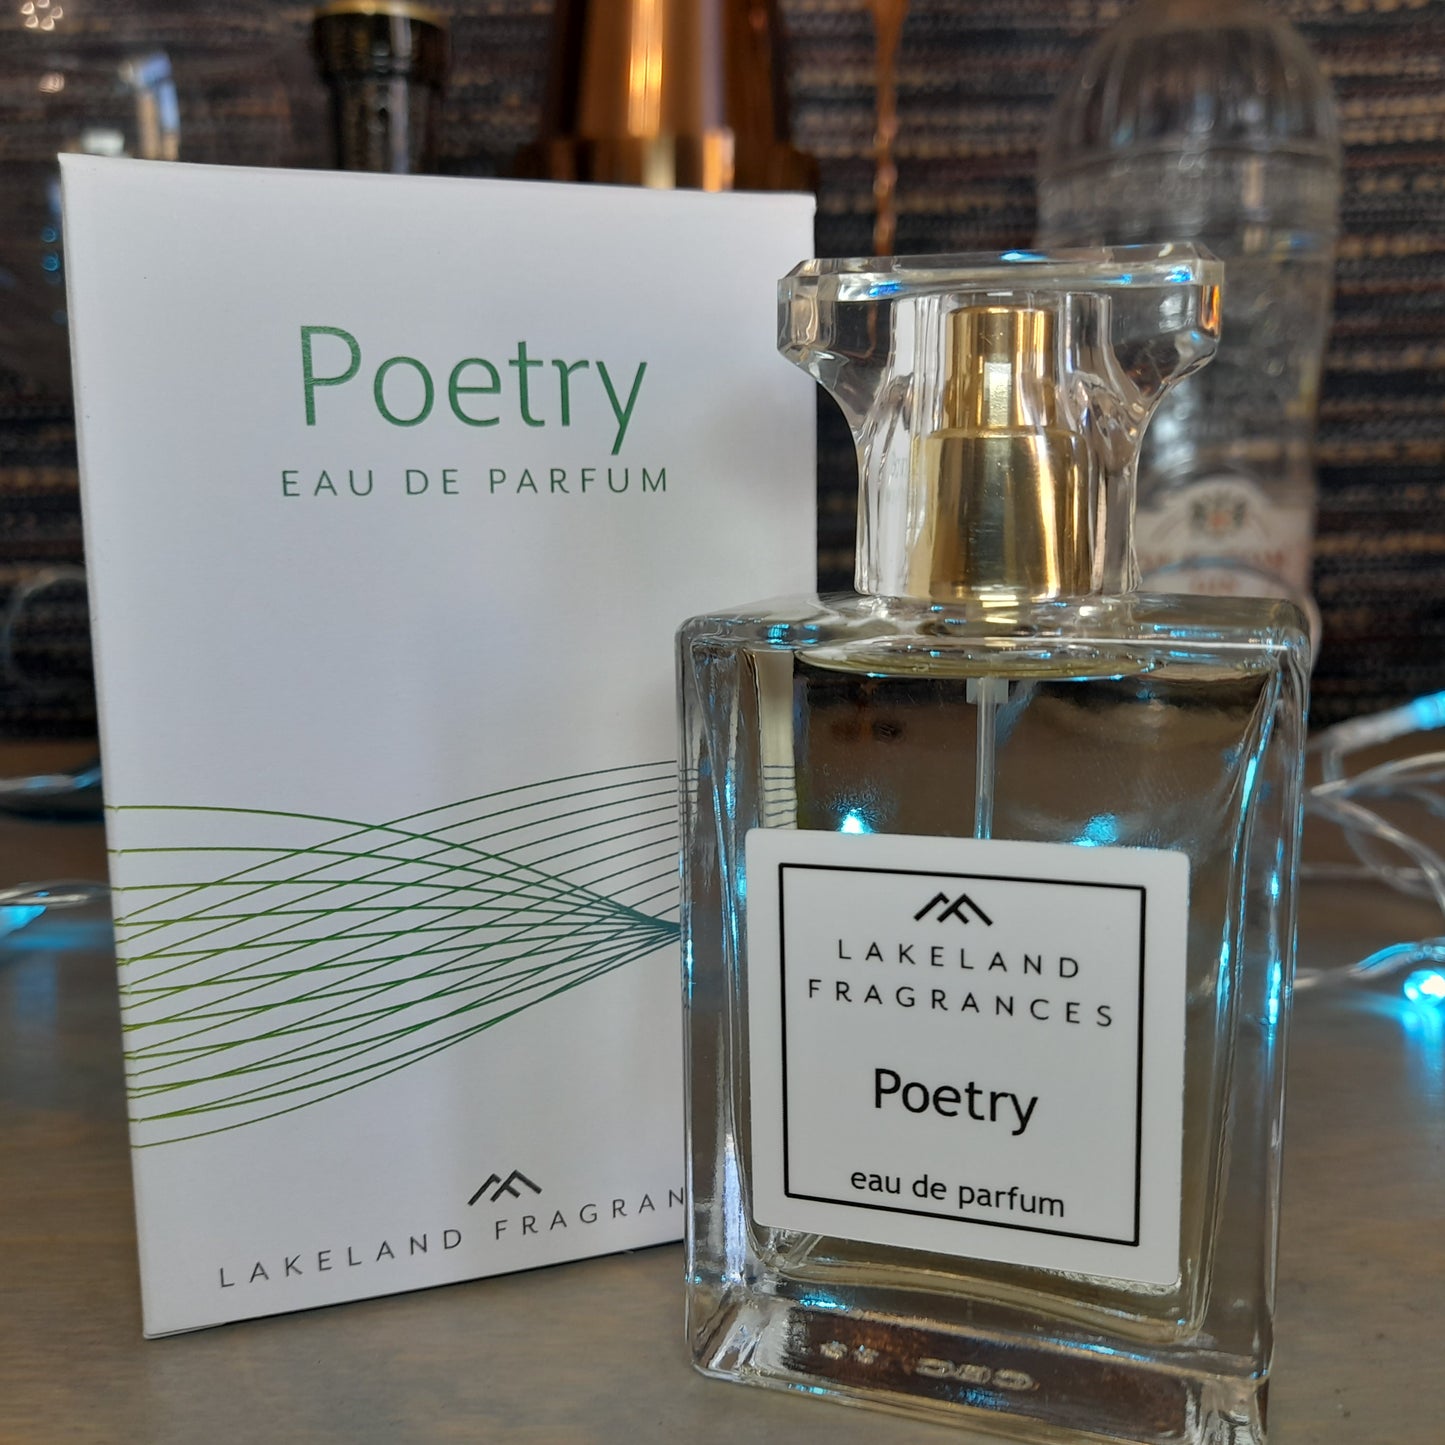 Poetry 50ml Eau de Parfum